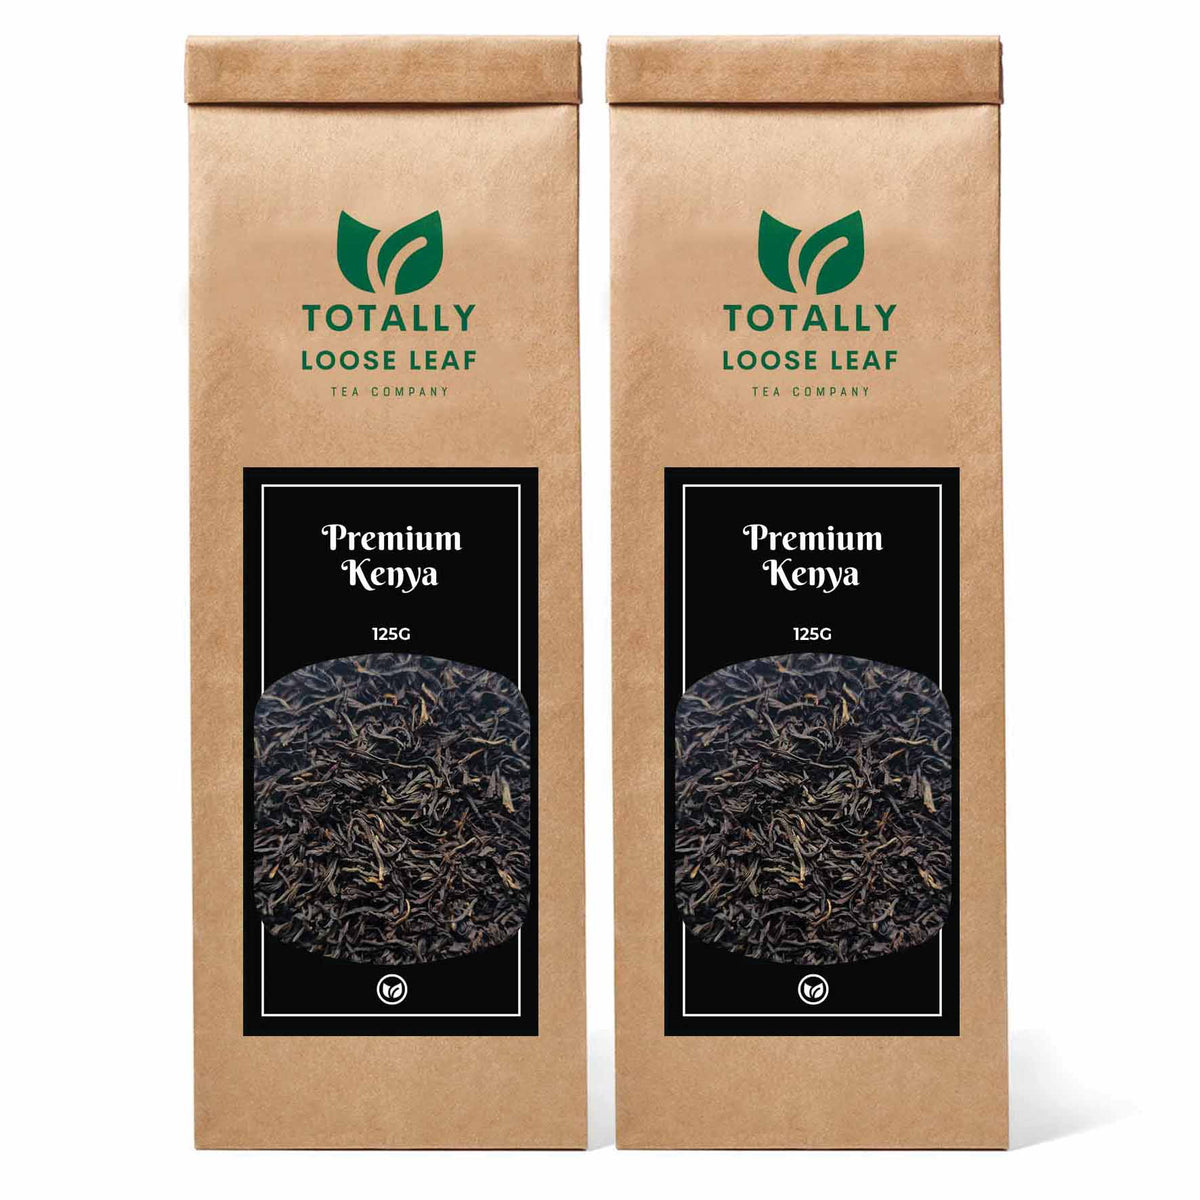 Premium Kenya Black Estate Loose Leaf Tea - two pouches